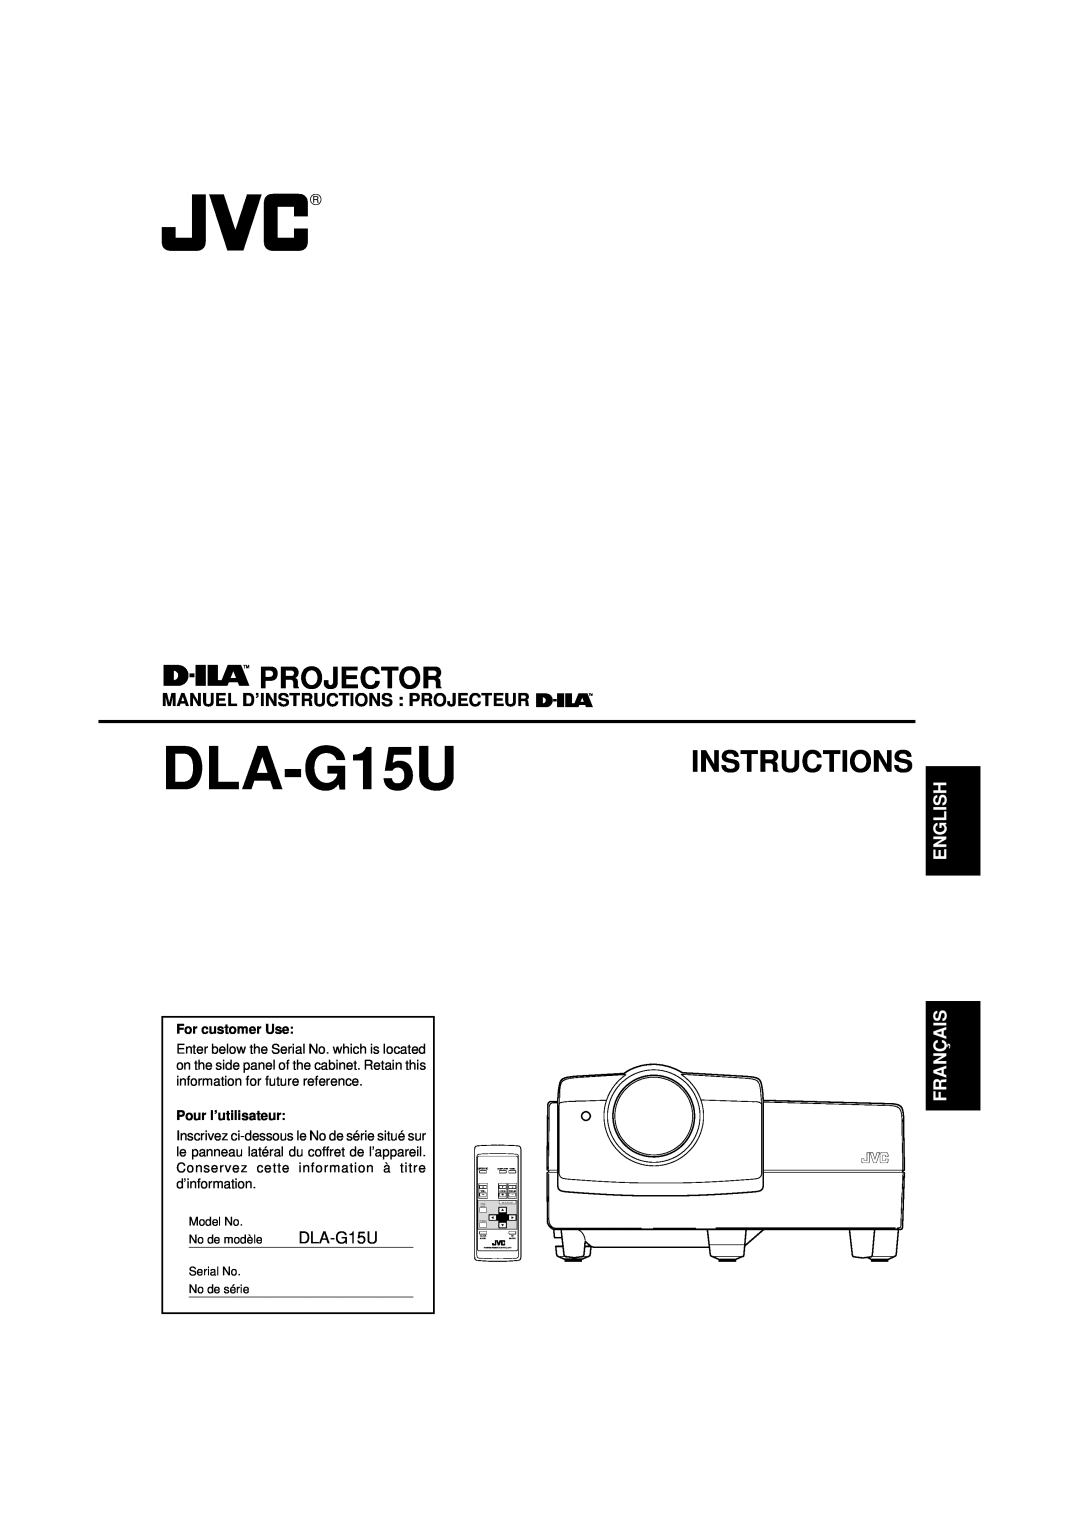 JVC DLA-G15U manual Projector, Manuel D’Instructions Projecteur, English, Français, For customer Use, Operate, Focus 